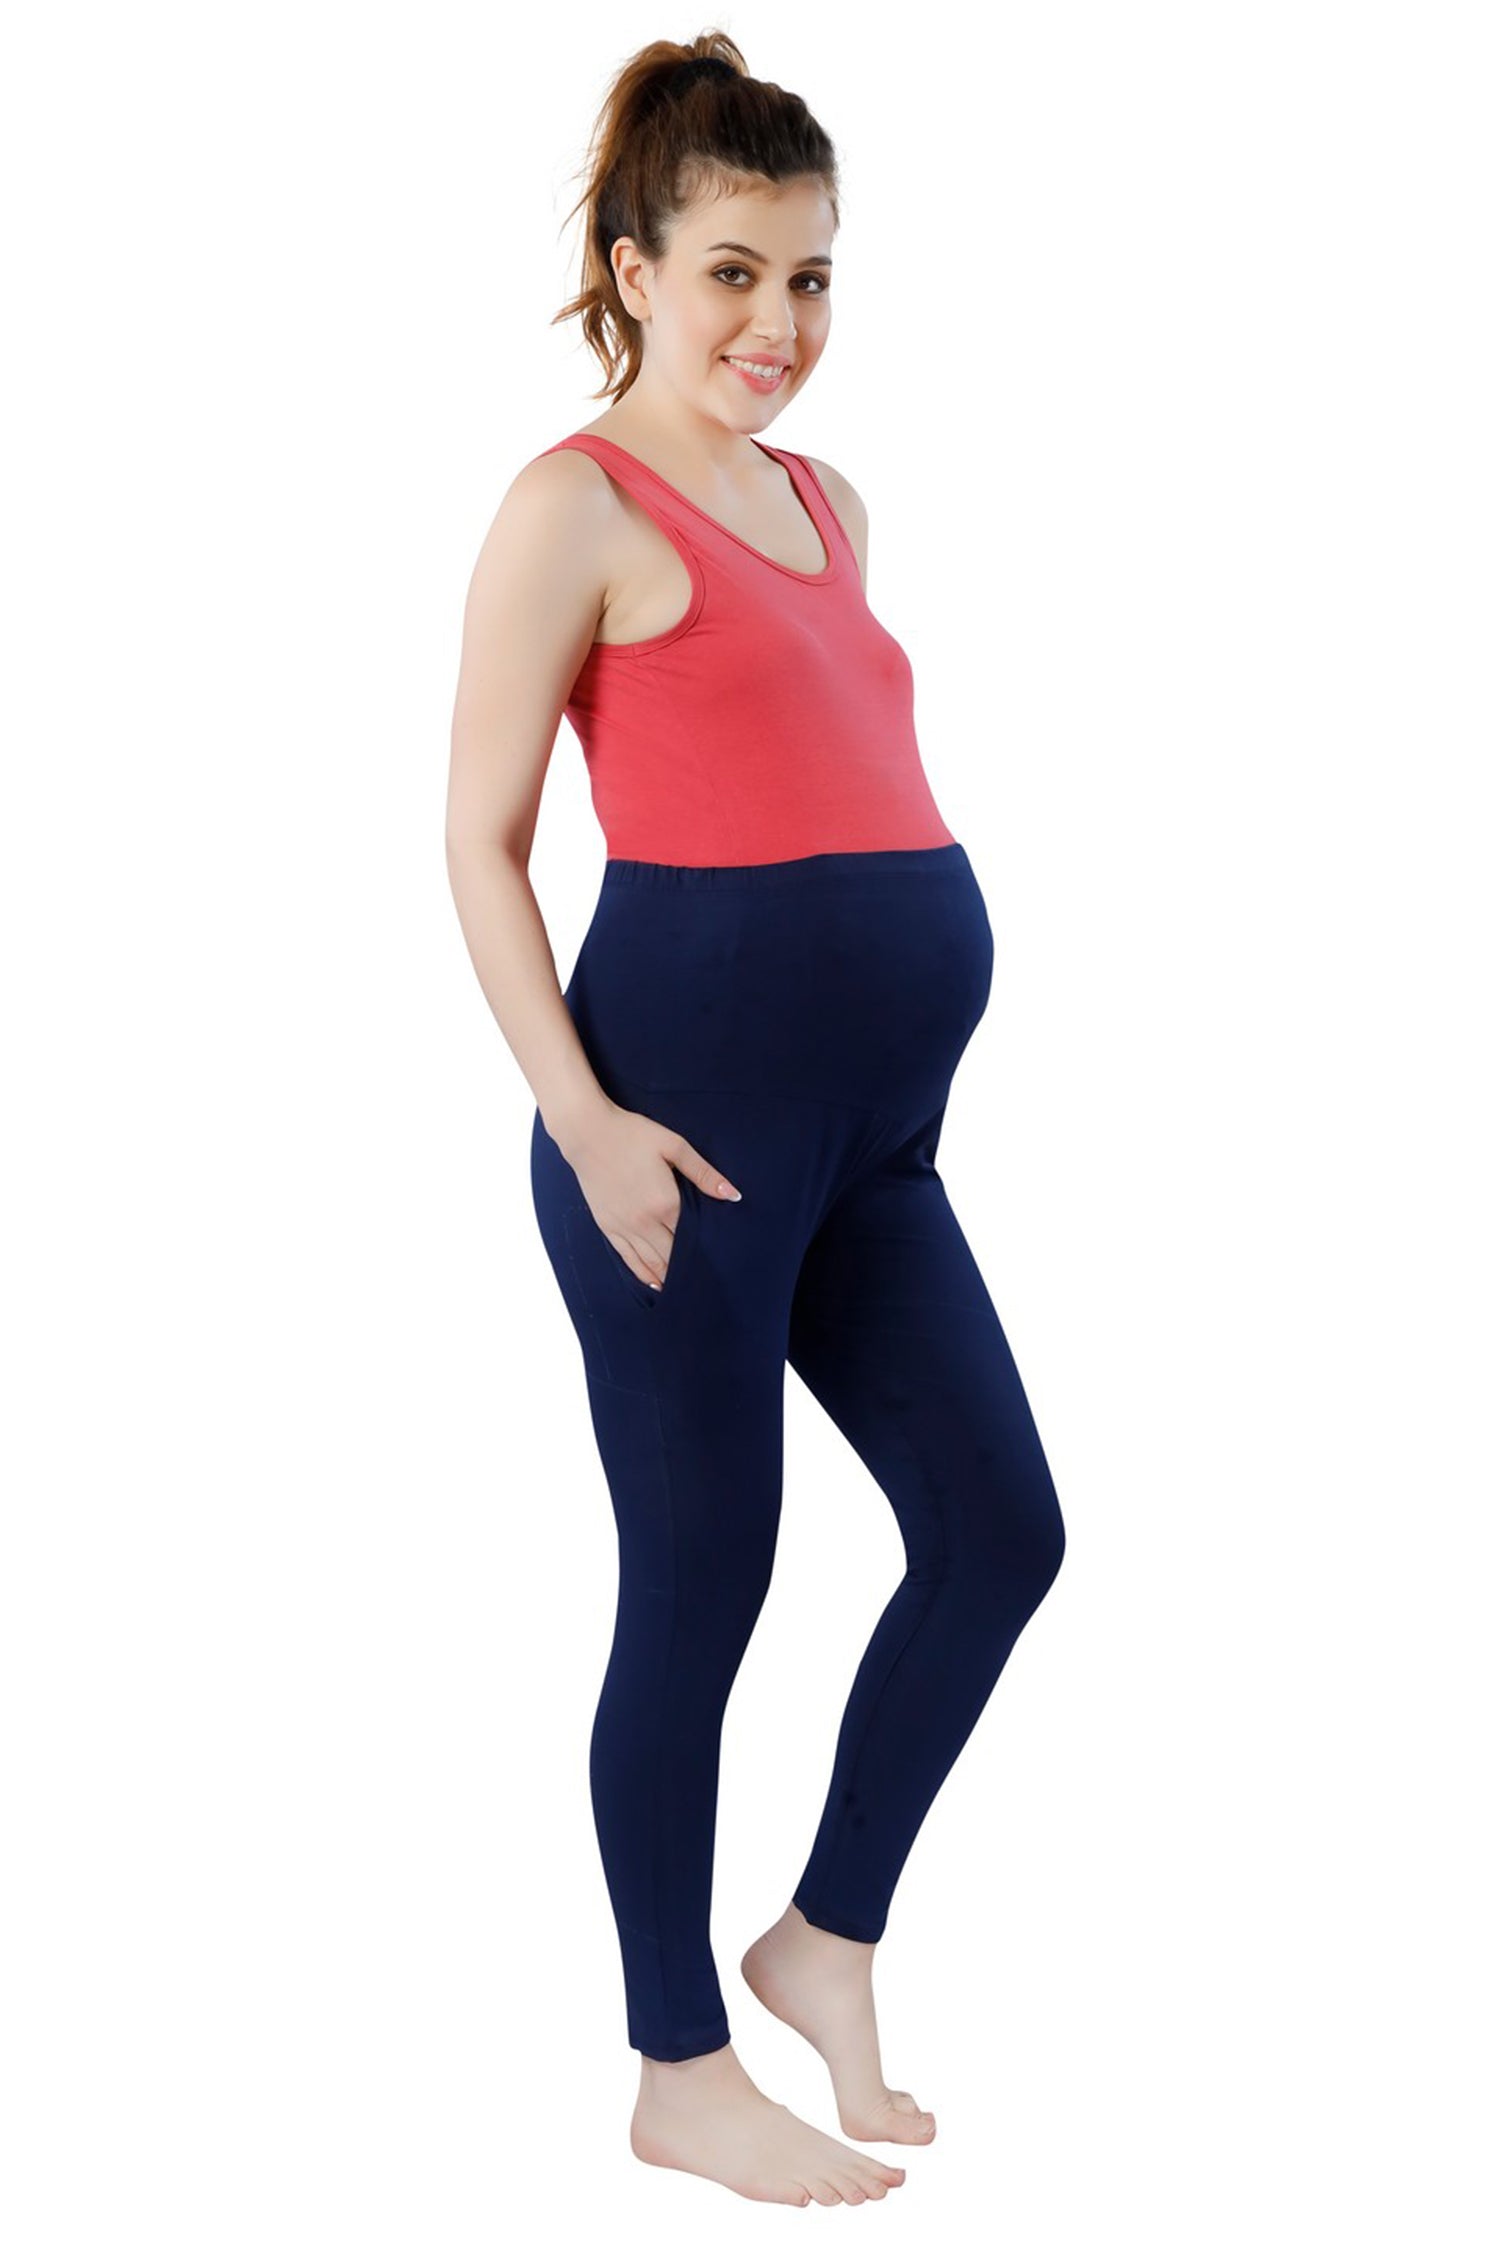 TRASA Women's Maternity Cotton Leggings Pregnancy Yoga Pants with Pock –